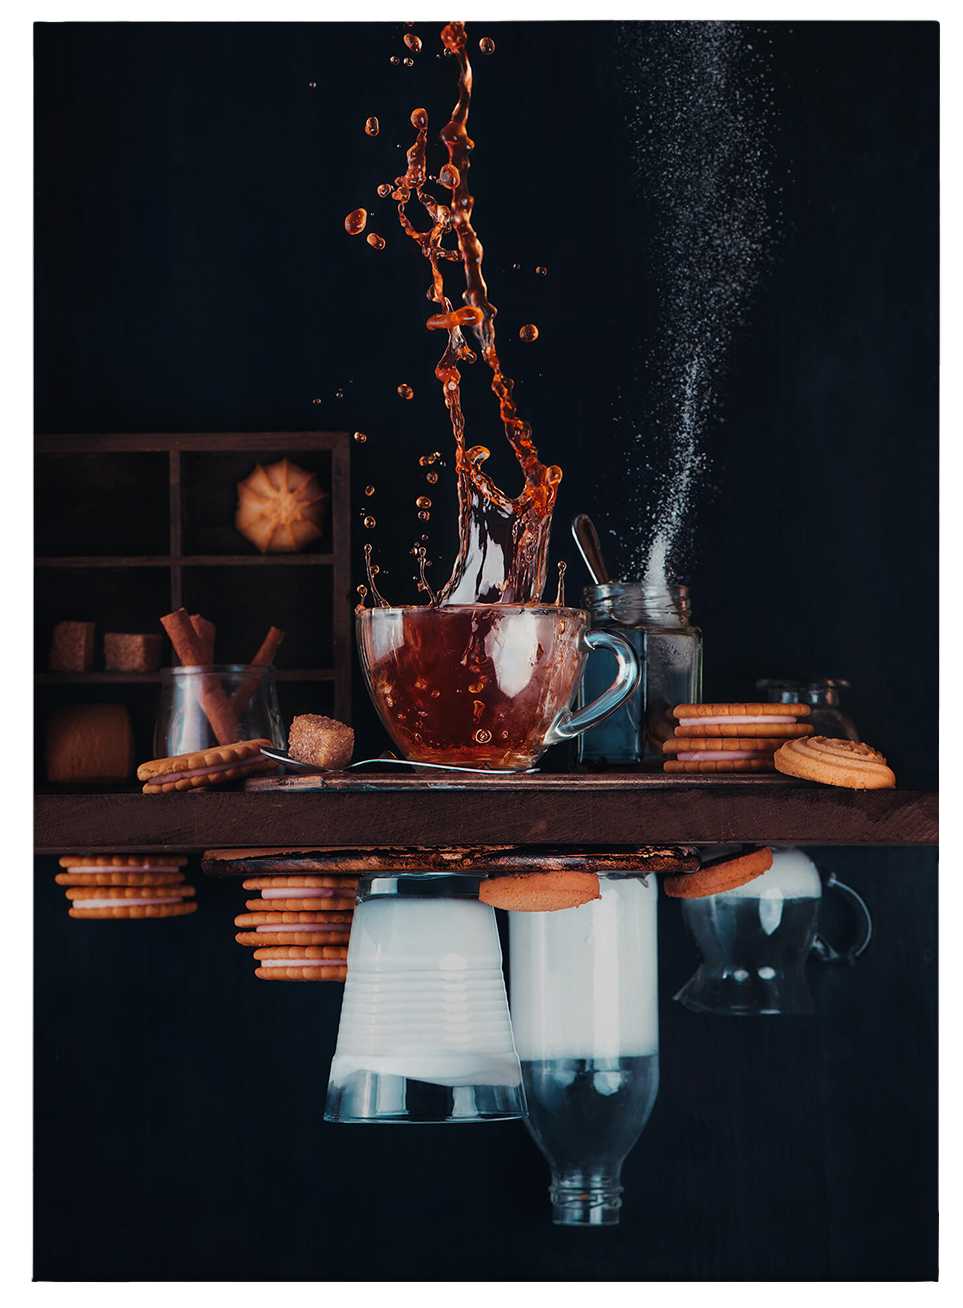             Kitchen canvas print by Blenkonov "Tea and milk"
        